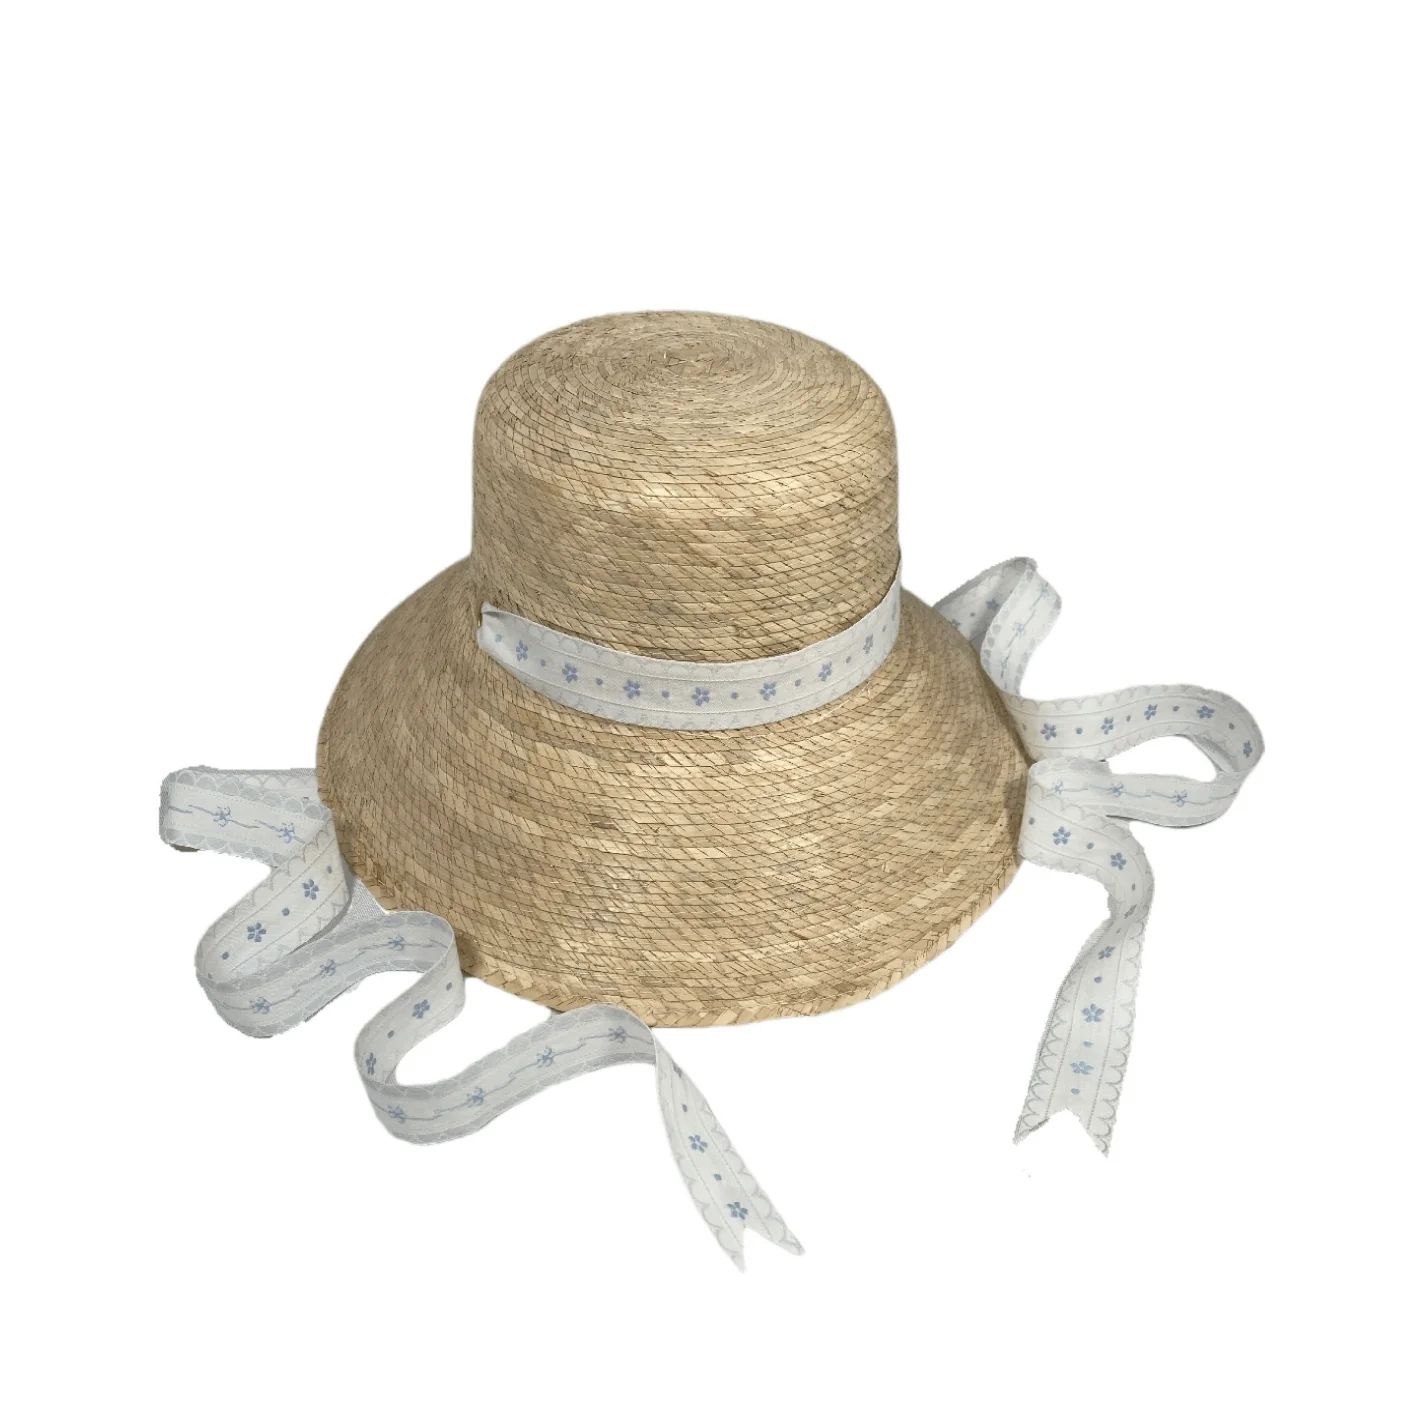 sarah bray girls palmetto sun hat with blue floral ribbon | minnow